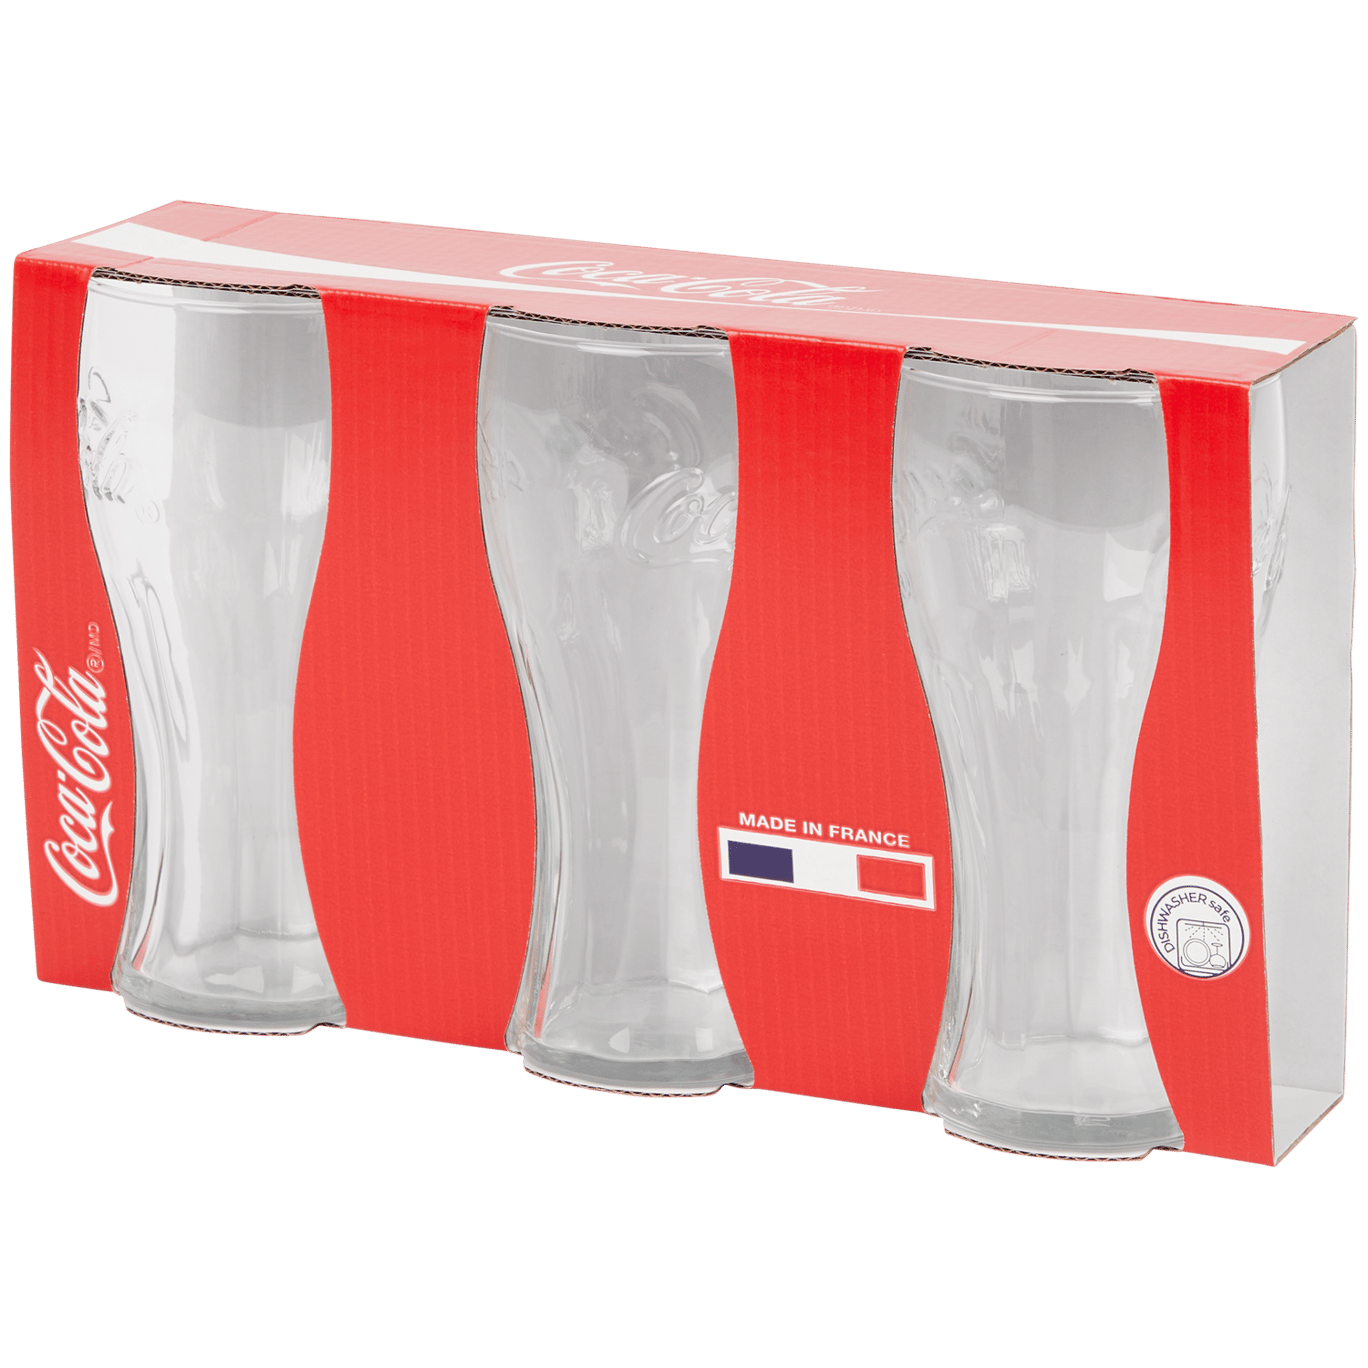 Durf Symmetrie vacuüm Coca-Cola glazen | Action.com